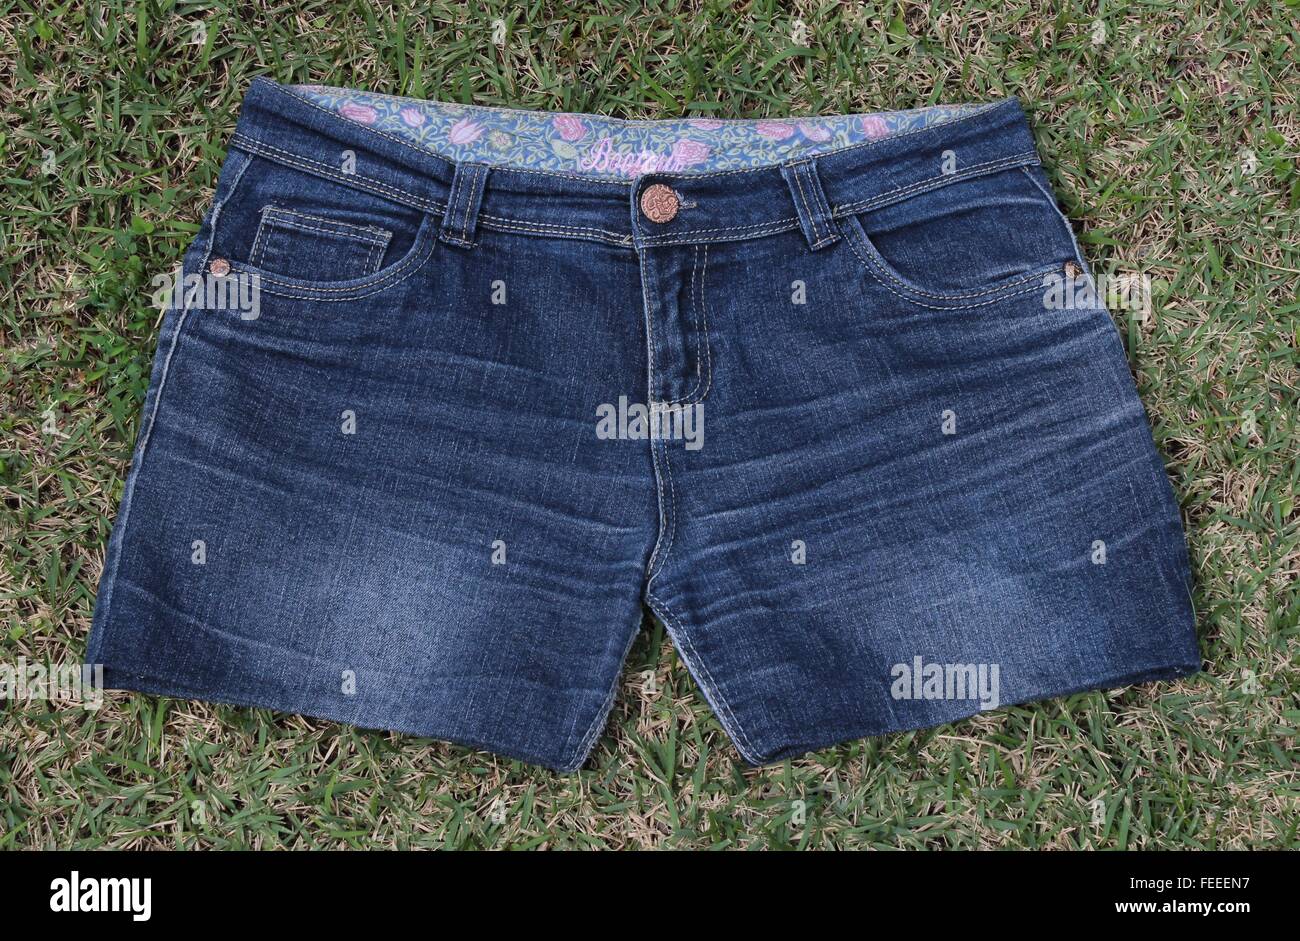 Short jeans before applying bleach. Stock Photo